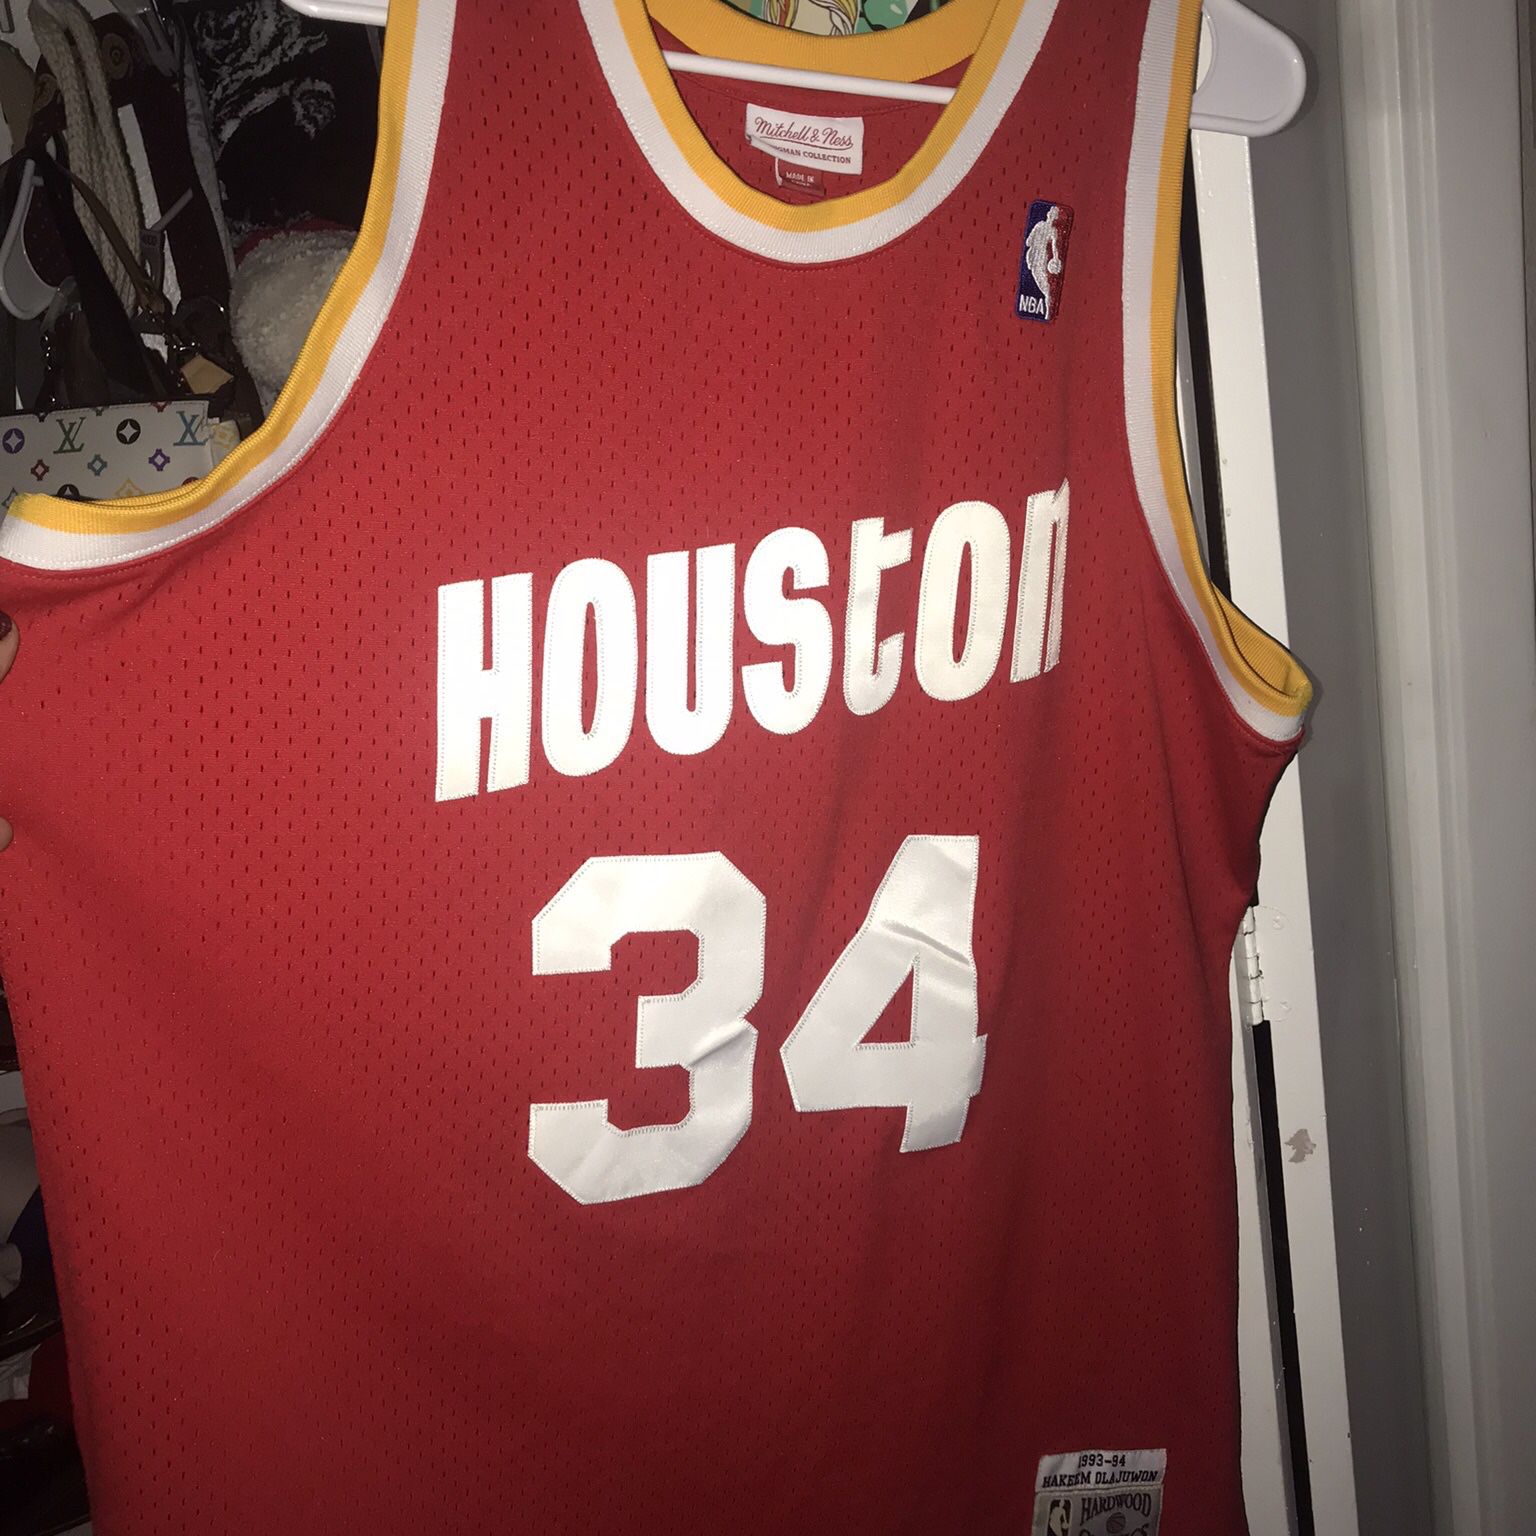 NBA Authentic Houston Rockets #34 Jersey XL